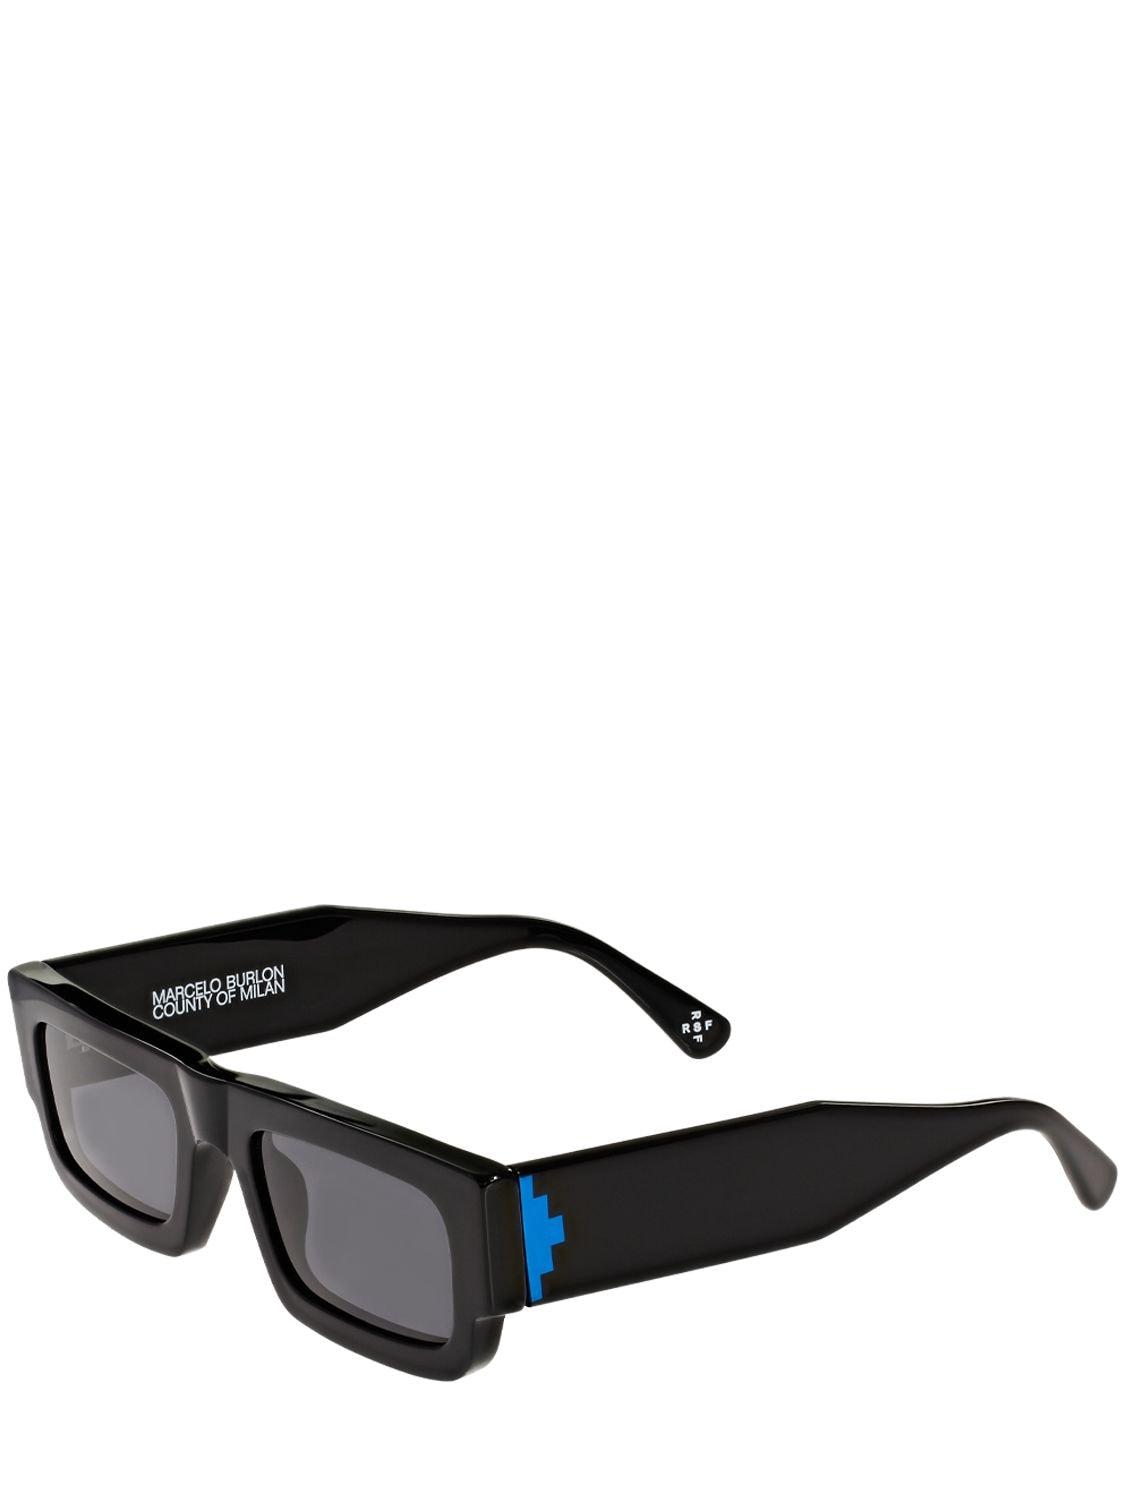 Marcelo Burlon Rsf Co-lab Cross Lowrider Sunglasses in Black/Blue (Black)  for Men | Lyst